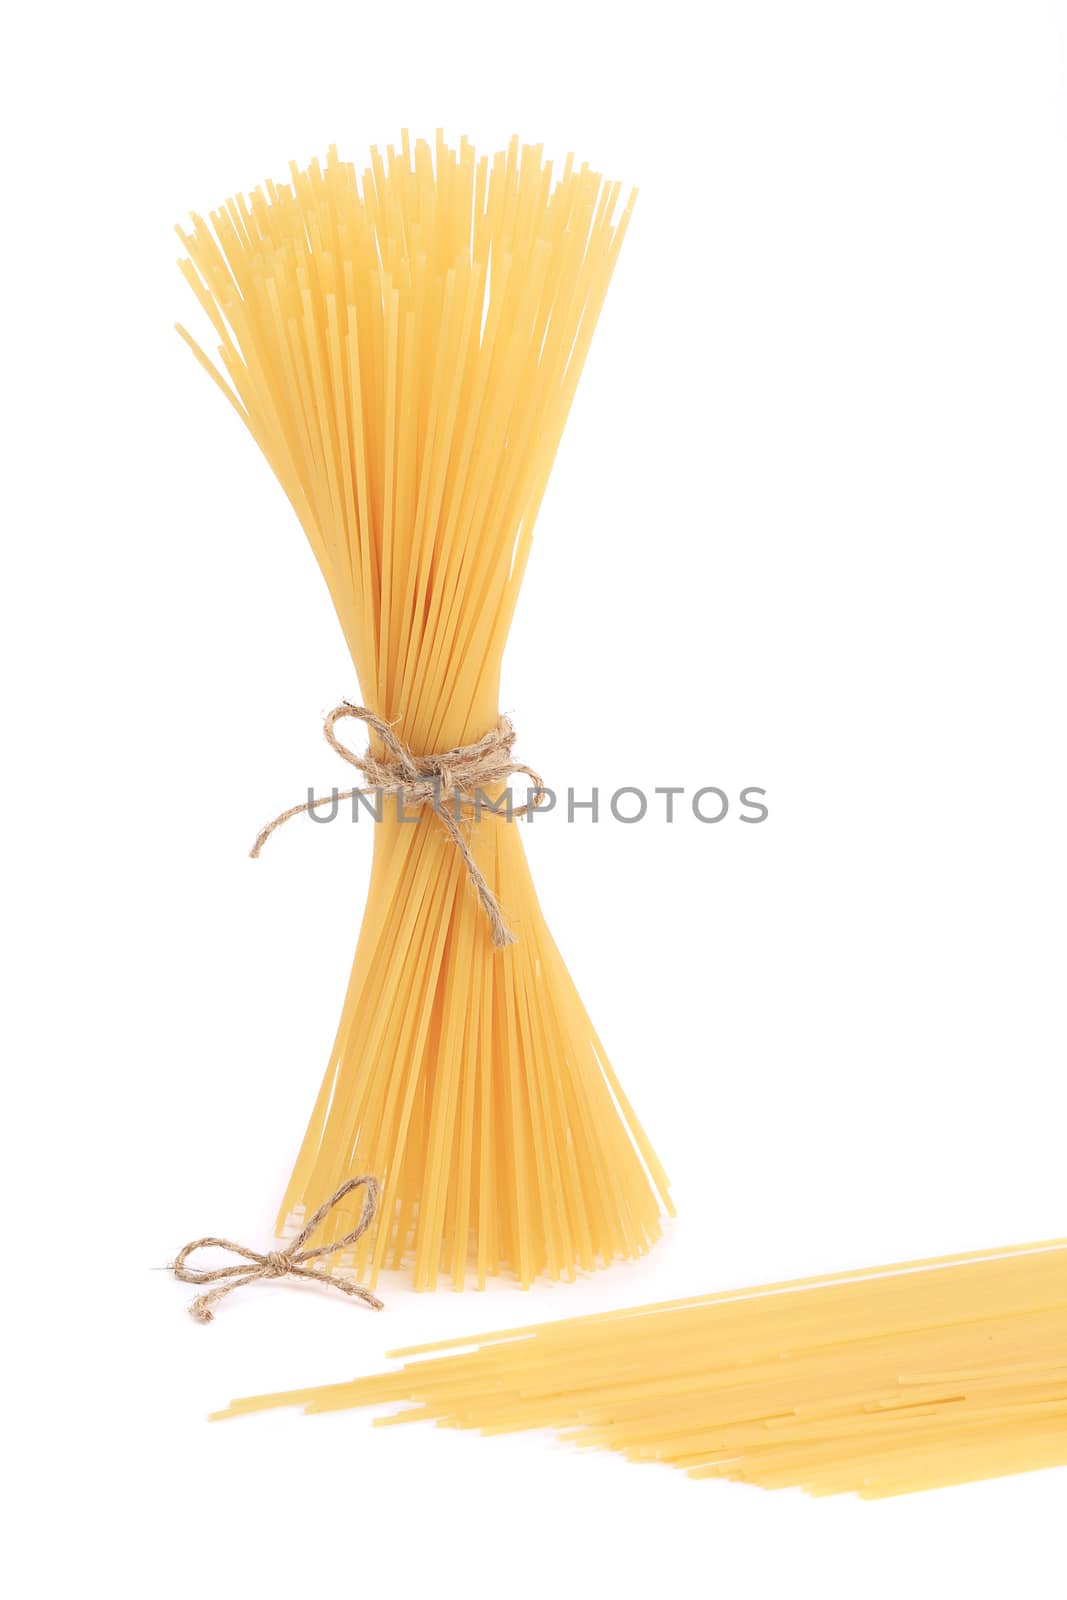 Uncooked italian pasta. by indigolotos